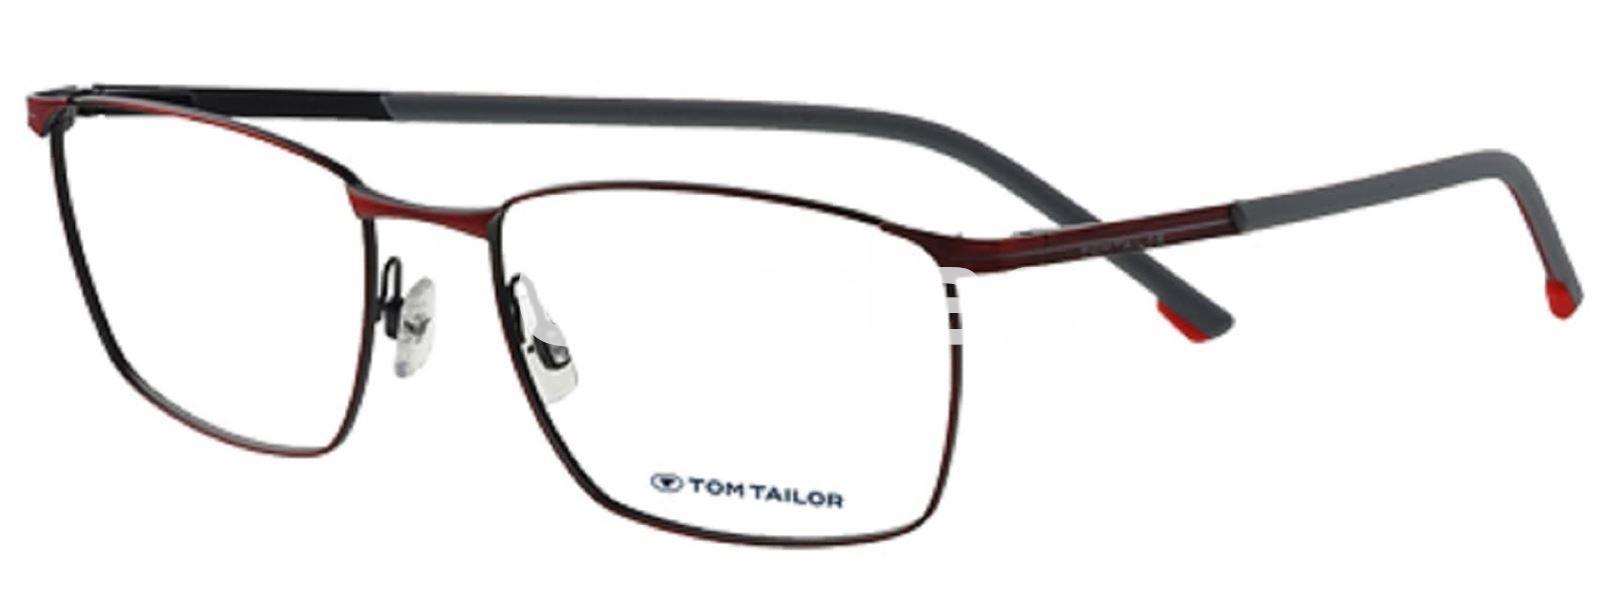 Tom Tailor 60619. - Imagen 1